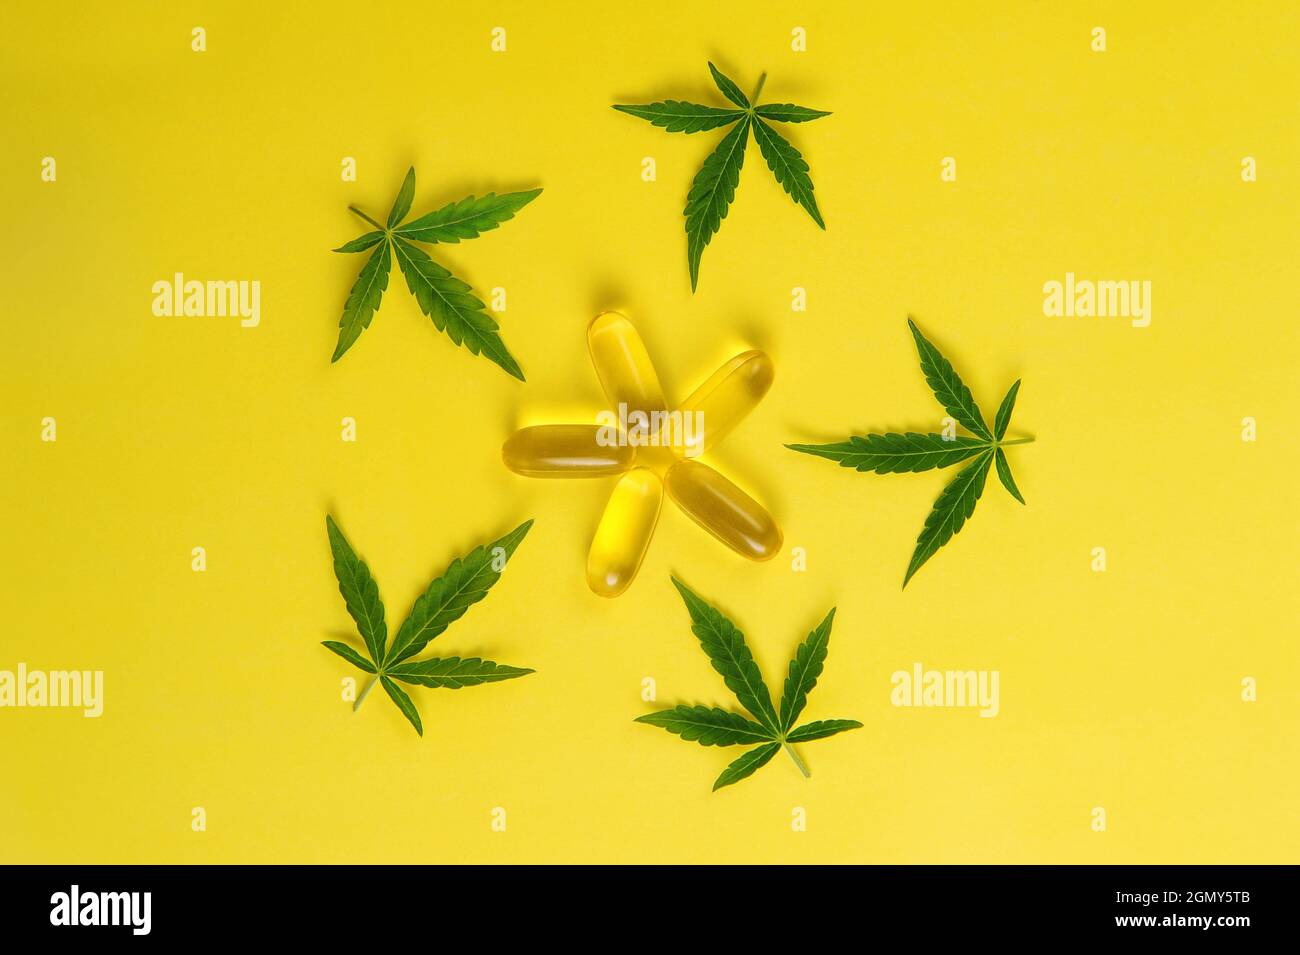 Marijuana oil, fresh leaves. Cannabis plant on yellow background. Hemp recreation, medical usage, legalization. Stock Photo